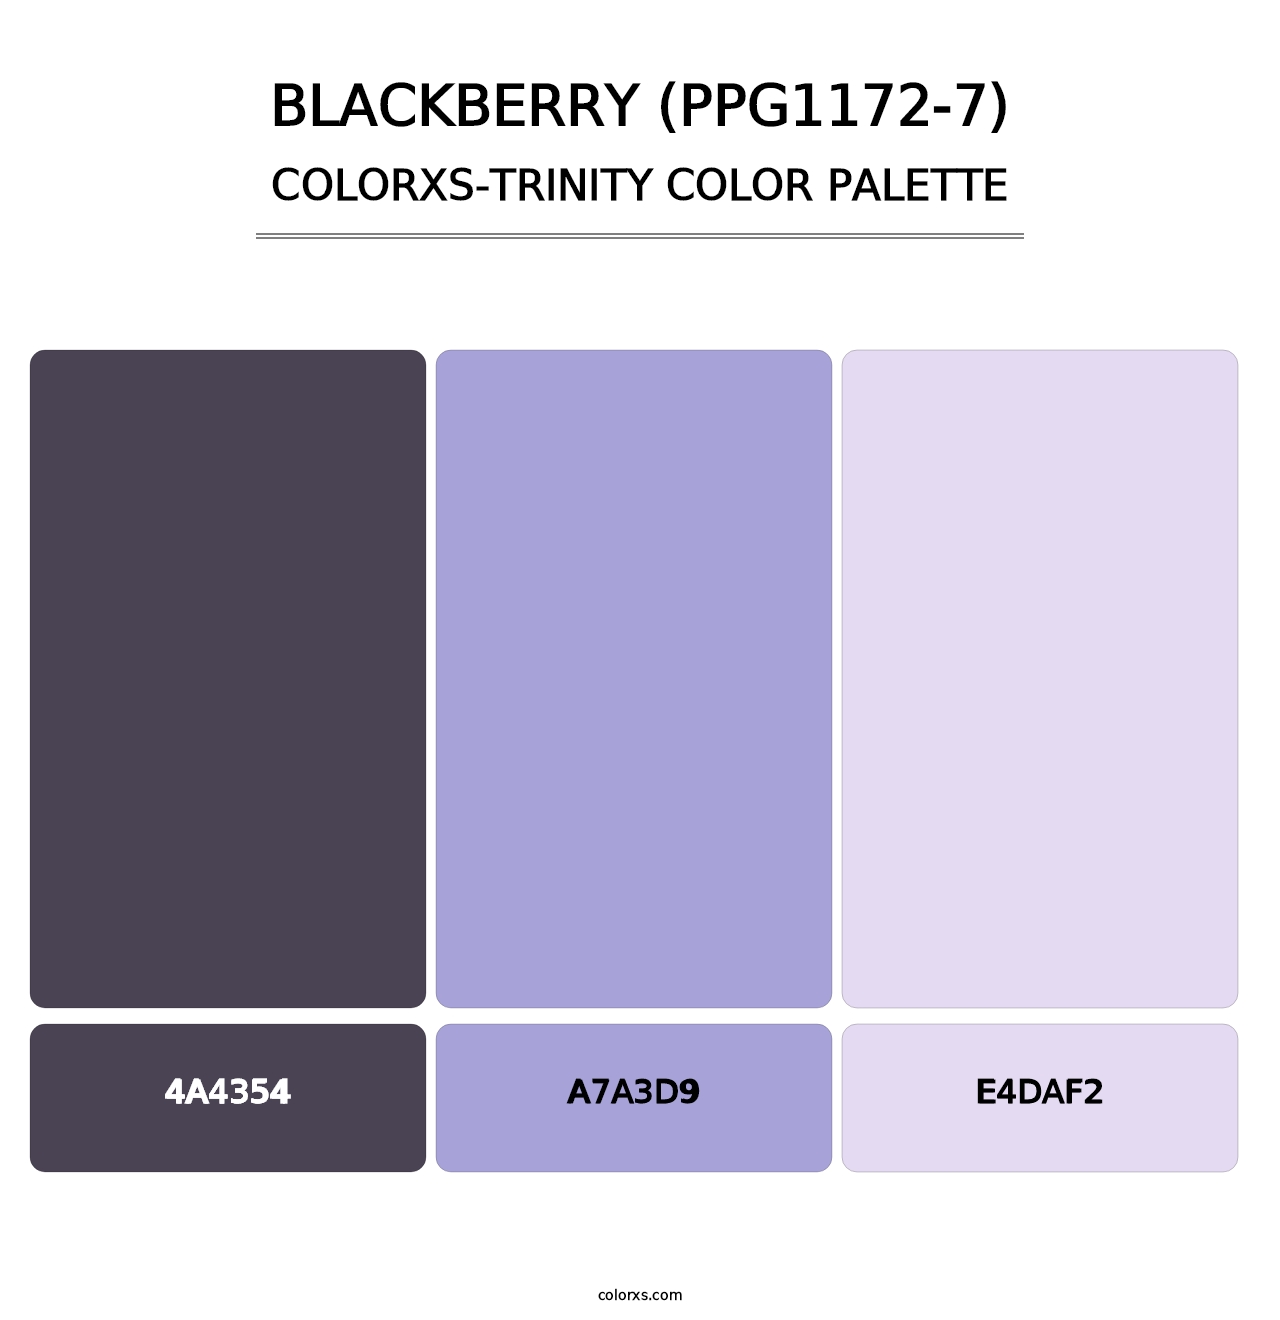 Blackberry (PPG1172-7) - Colorxs Trinity Palette